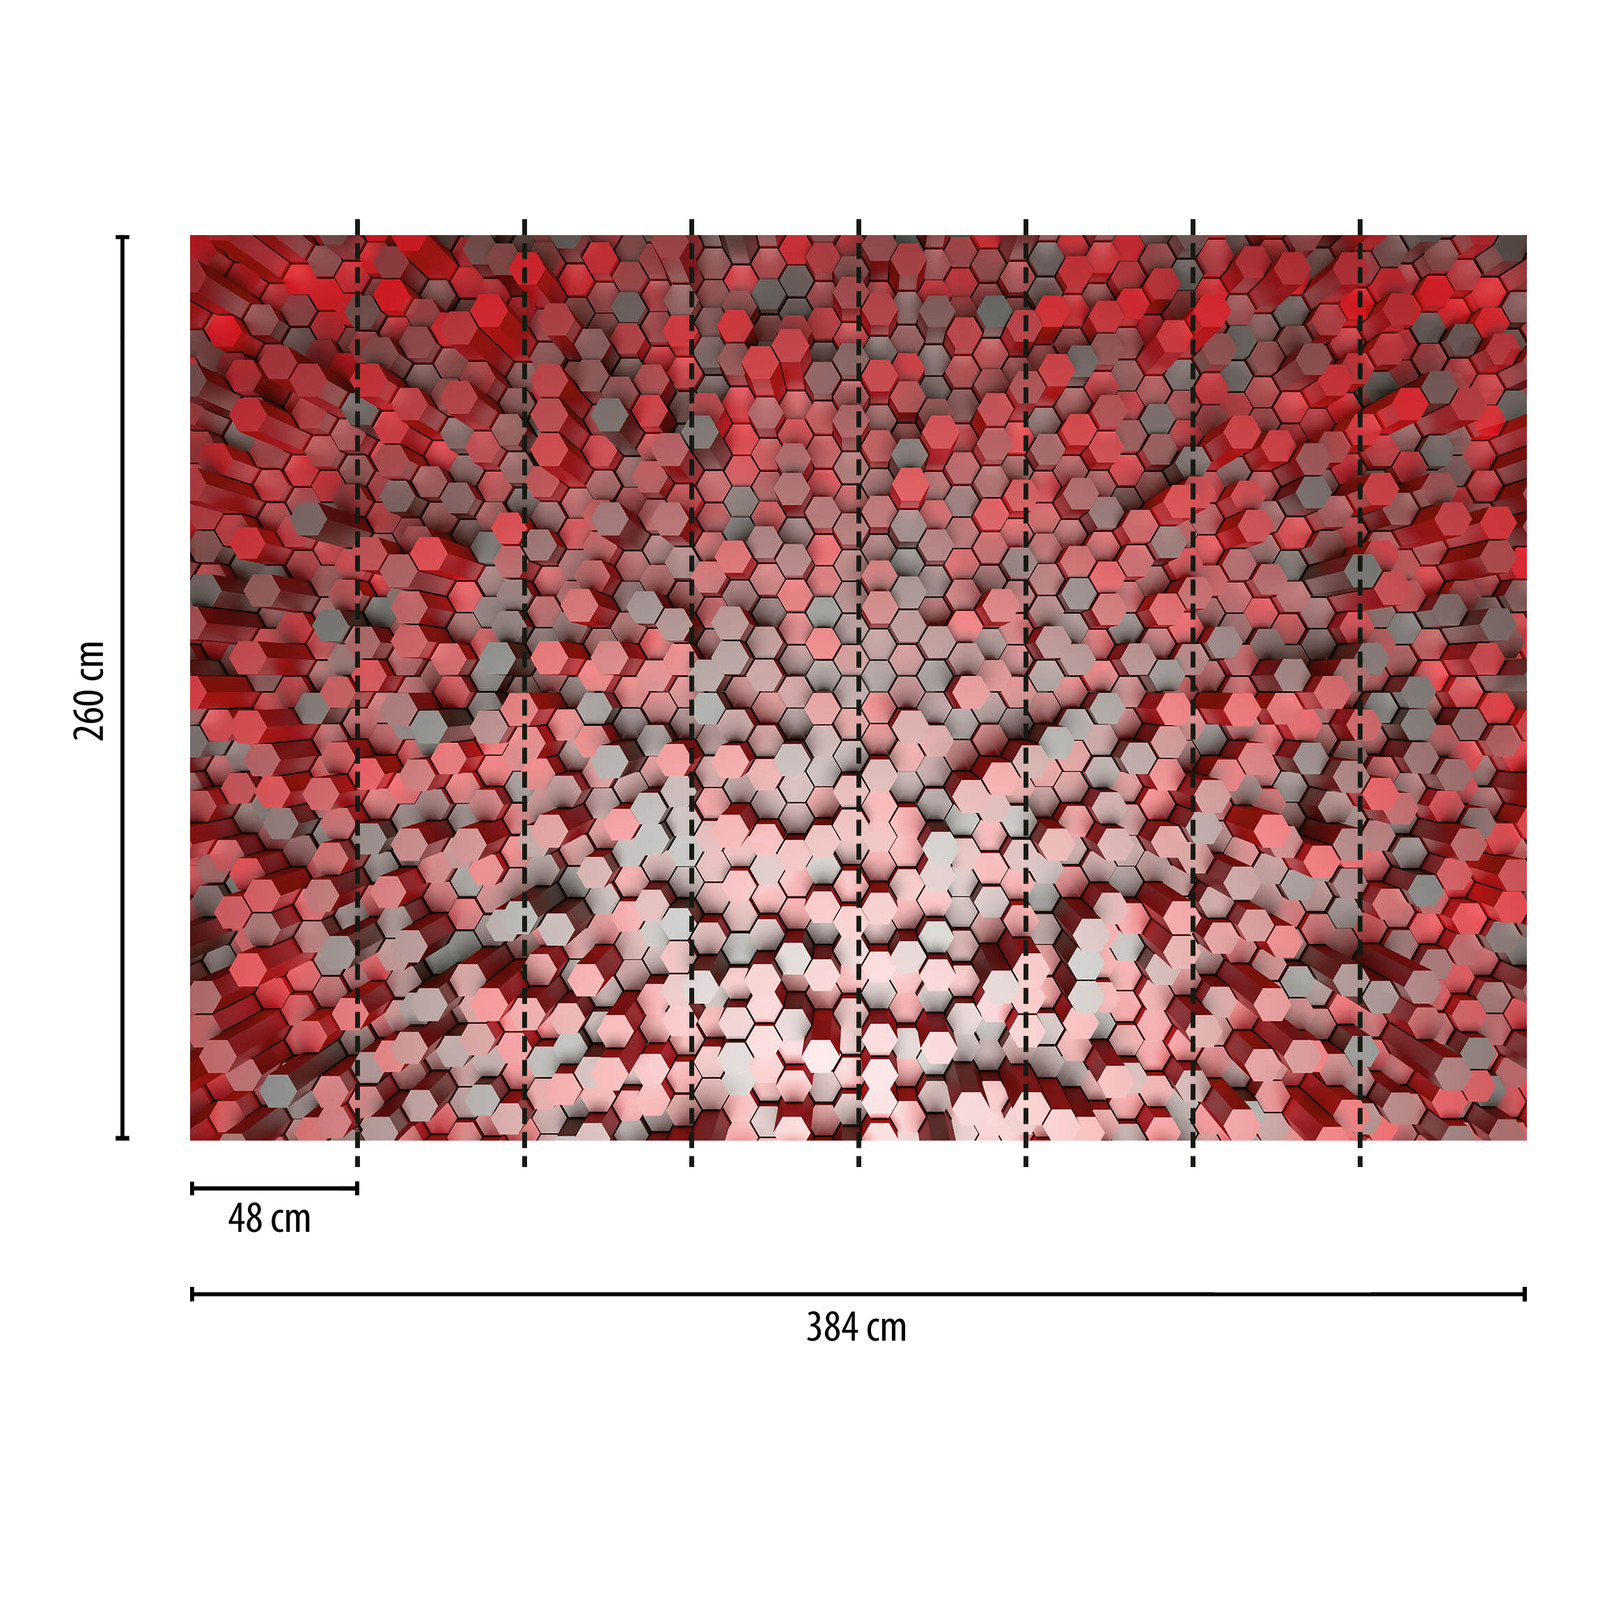             Grafik Fototapete 3D Hexagon Muster – Rot, Grau
        